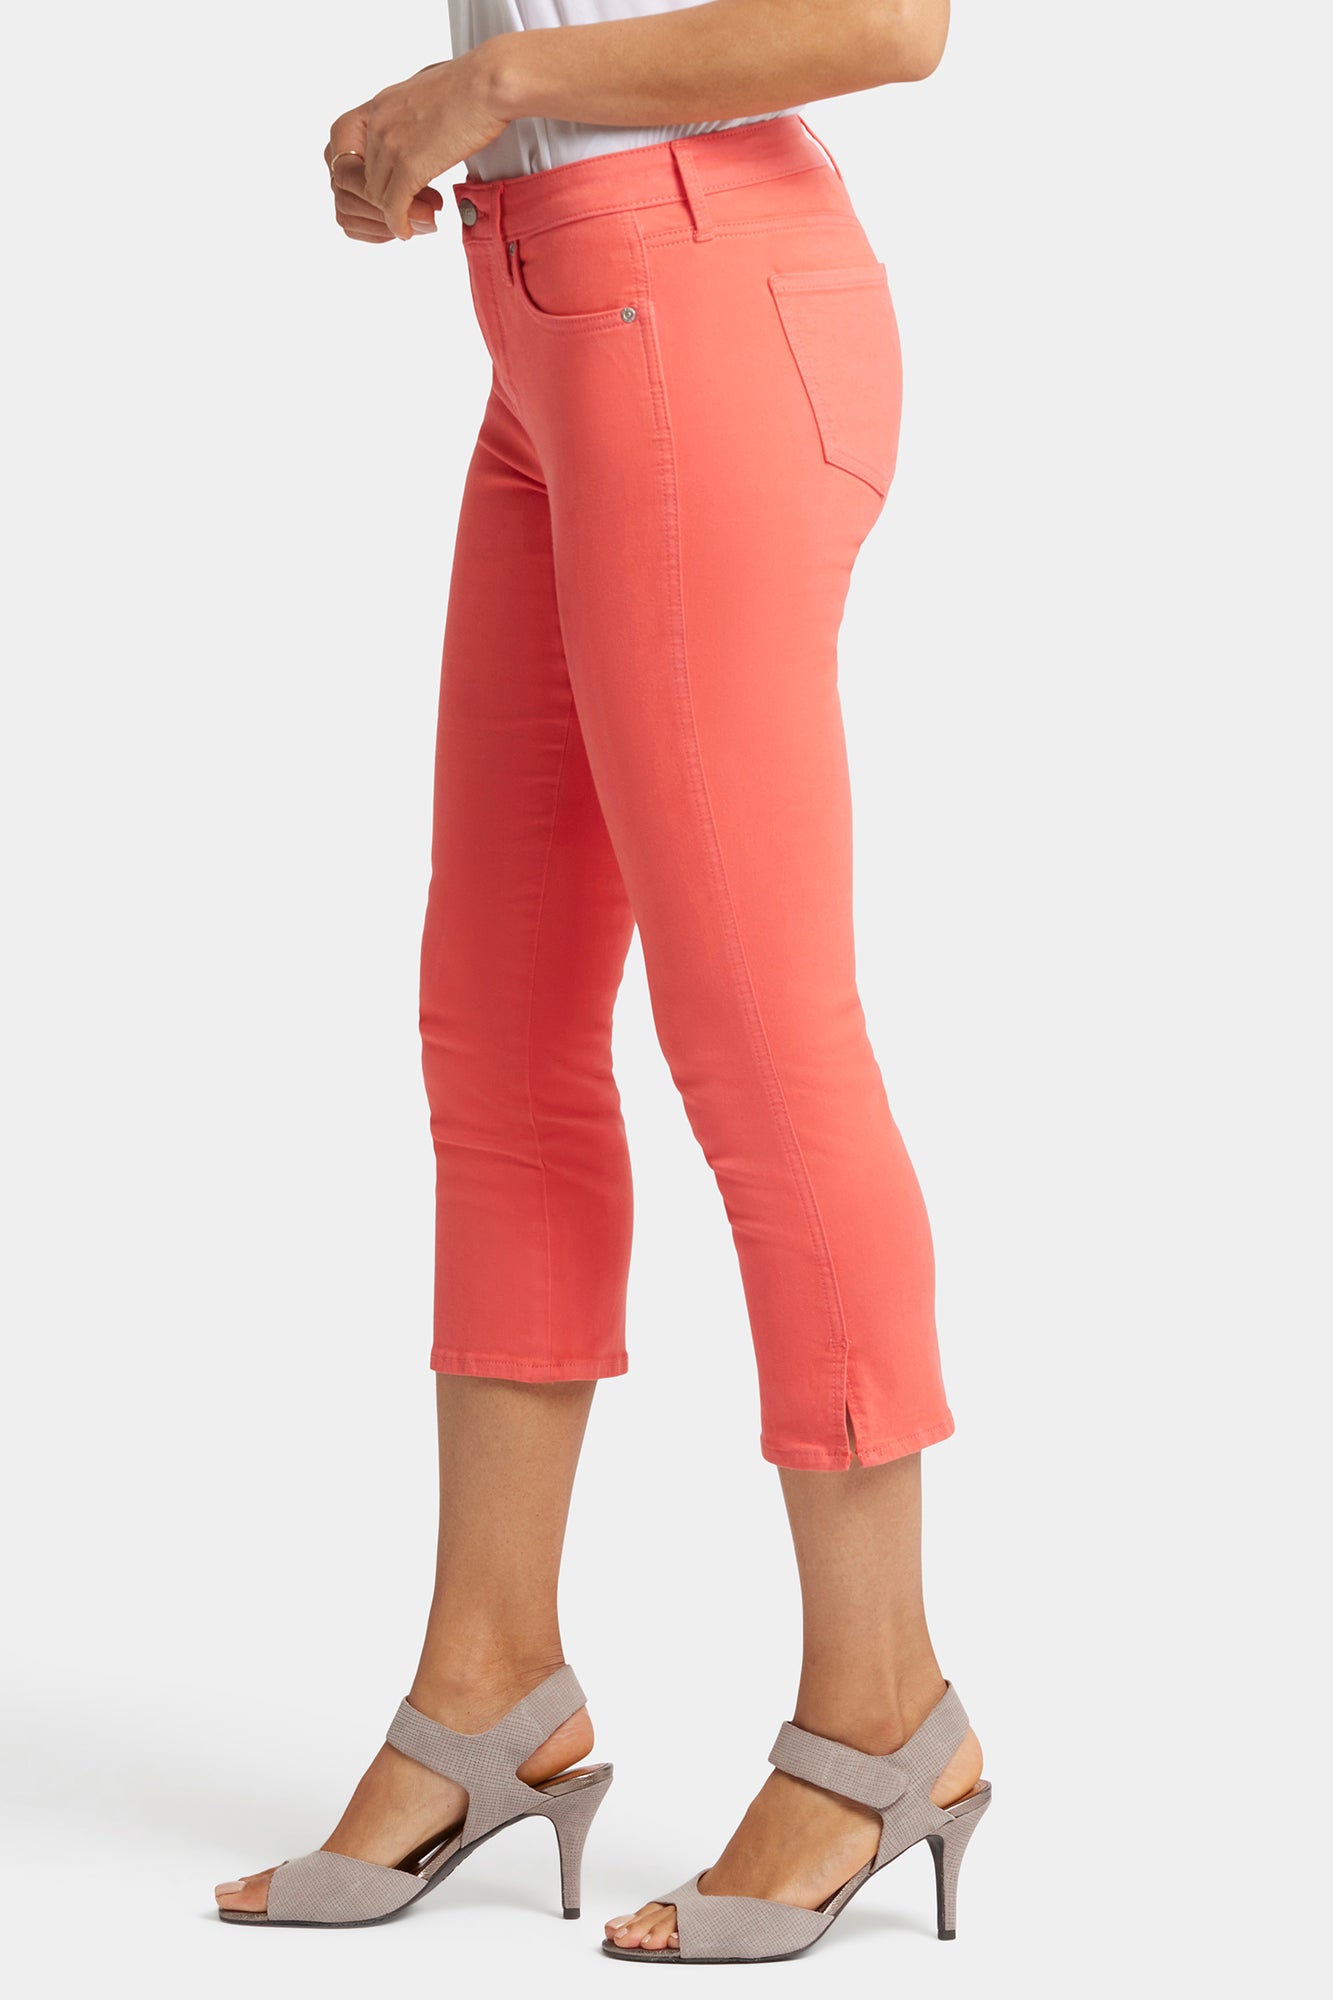 NYDJ Chloe Capri Jeans With Side Slits - Fruit Punch